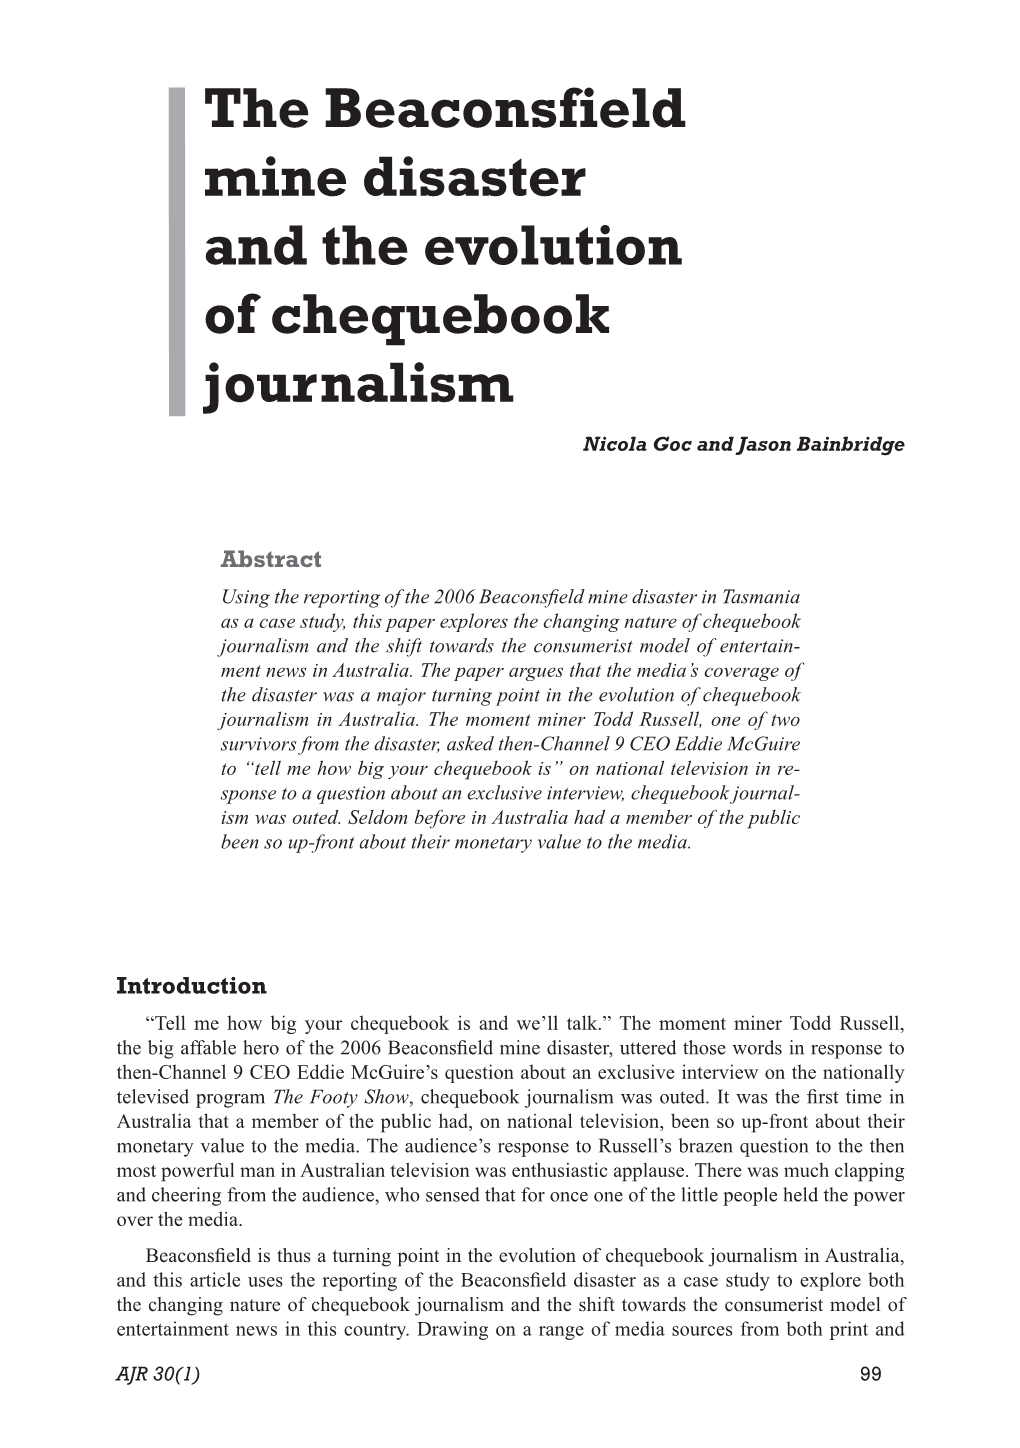 The Beaconsfield Mine Disaster and the Evolution of Chequebook Journalism Nicola Goc and Jason Bainbridge